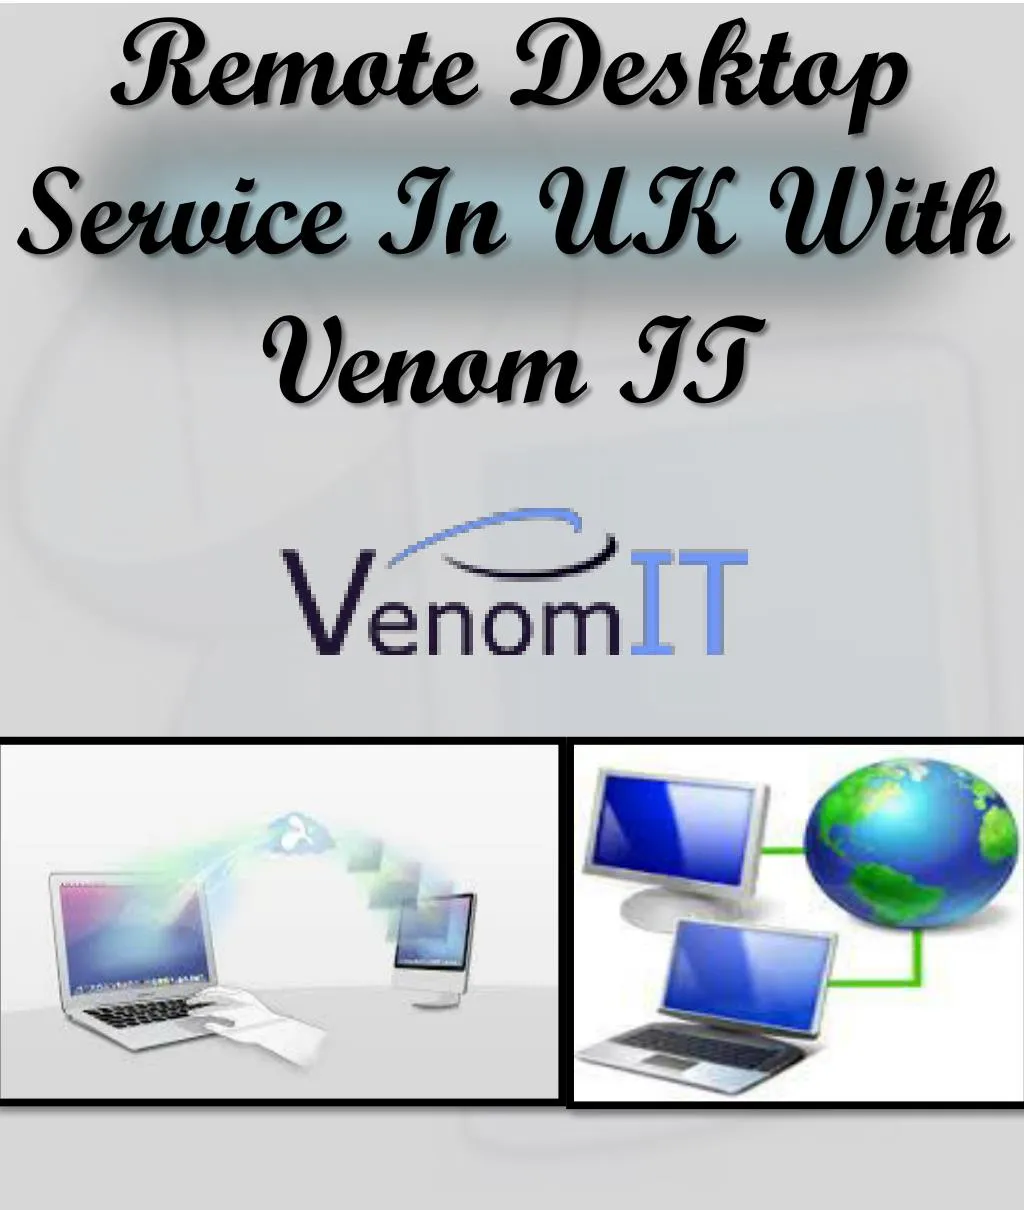 remote desktop service in uk with venom it